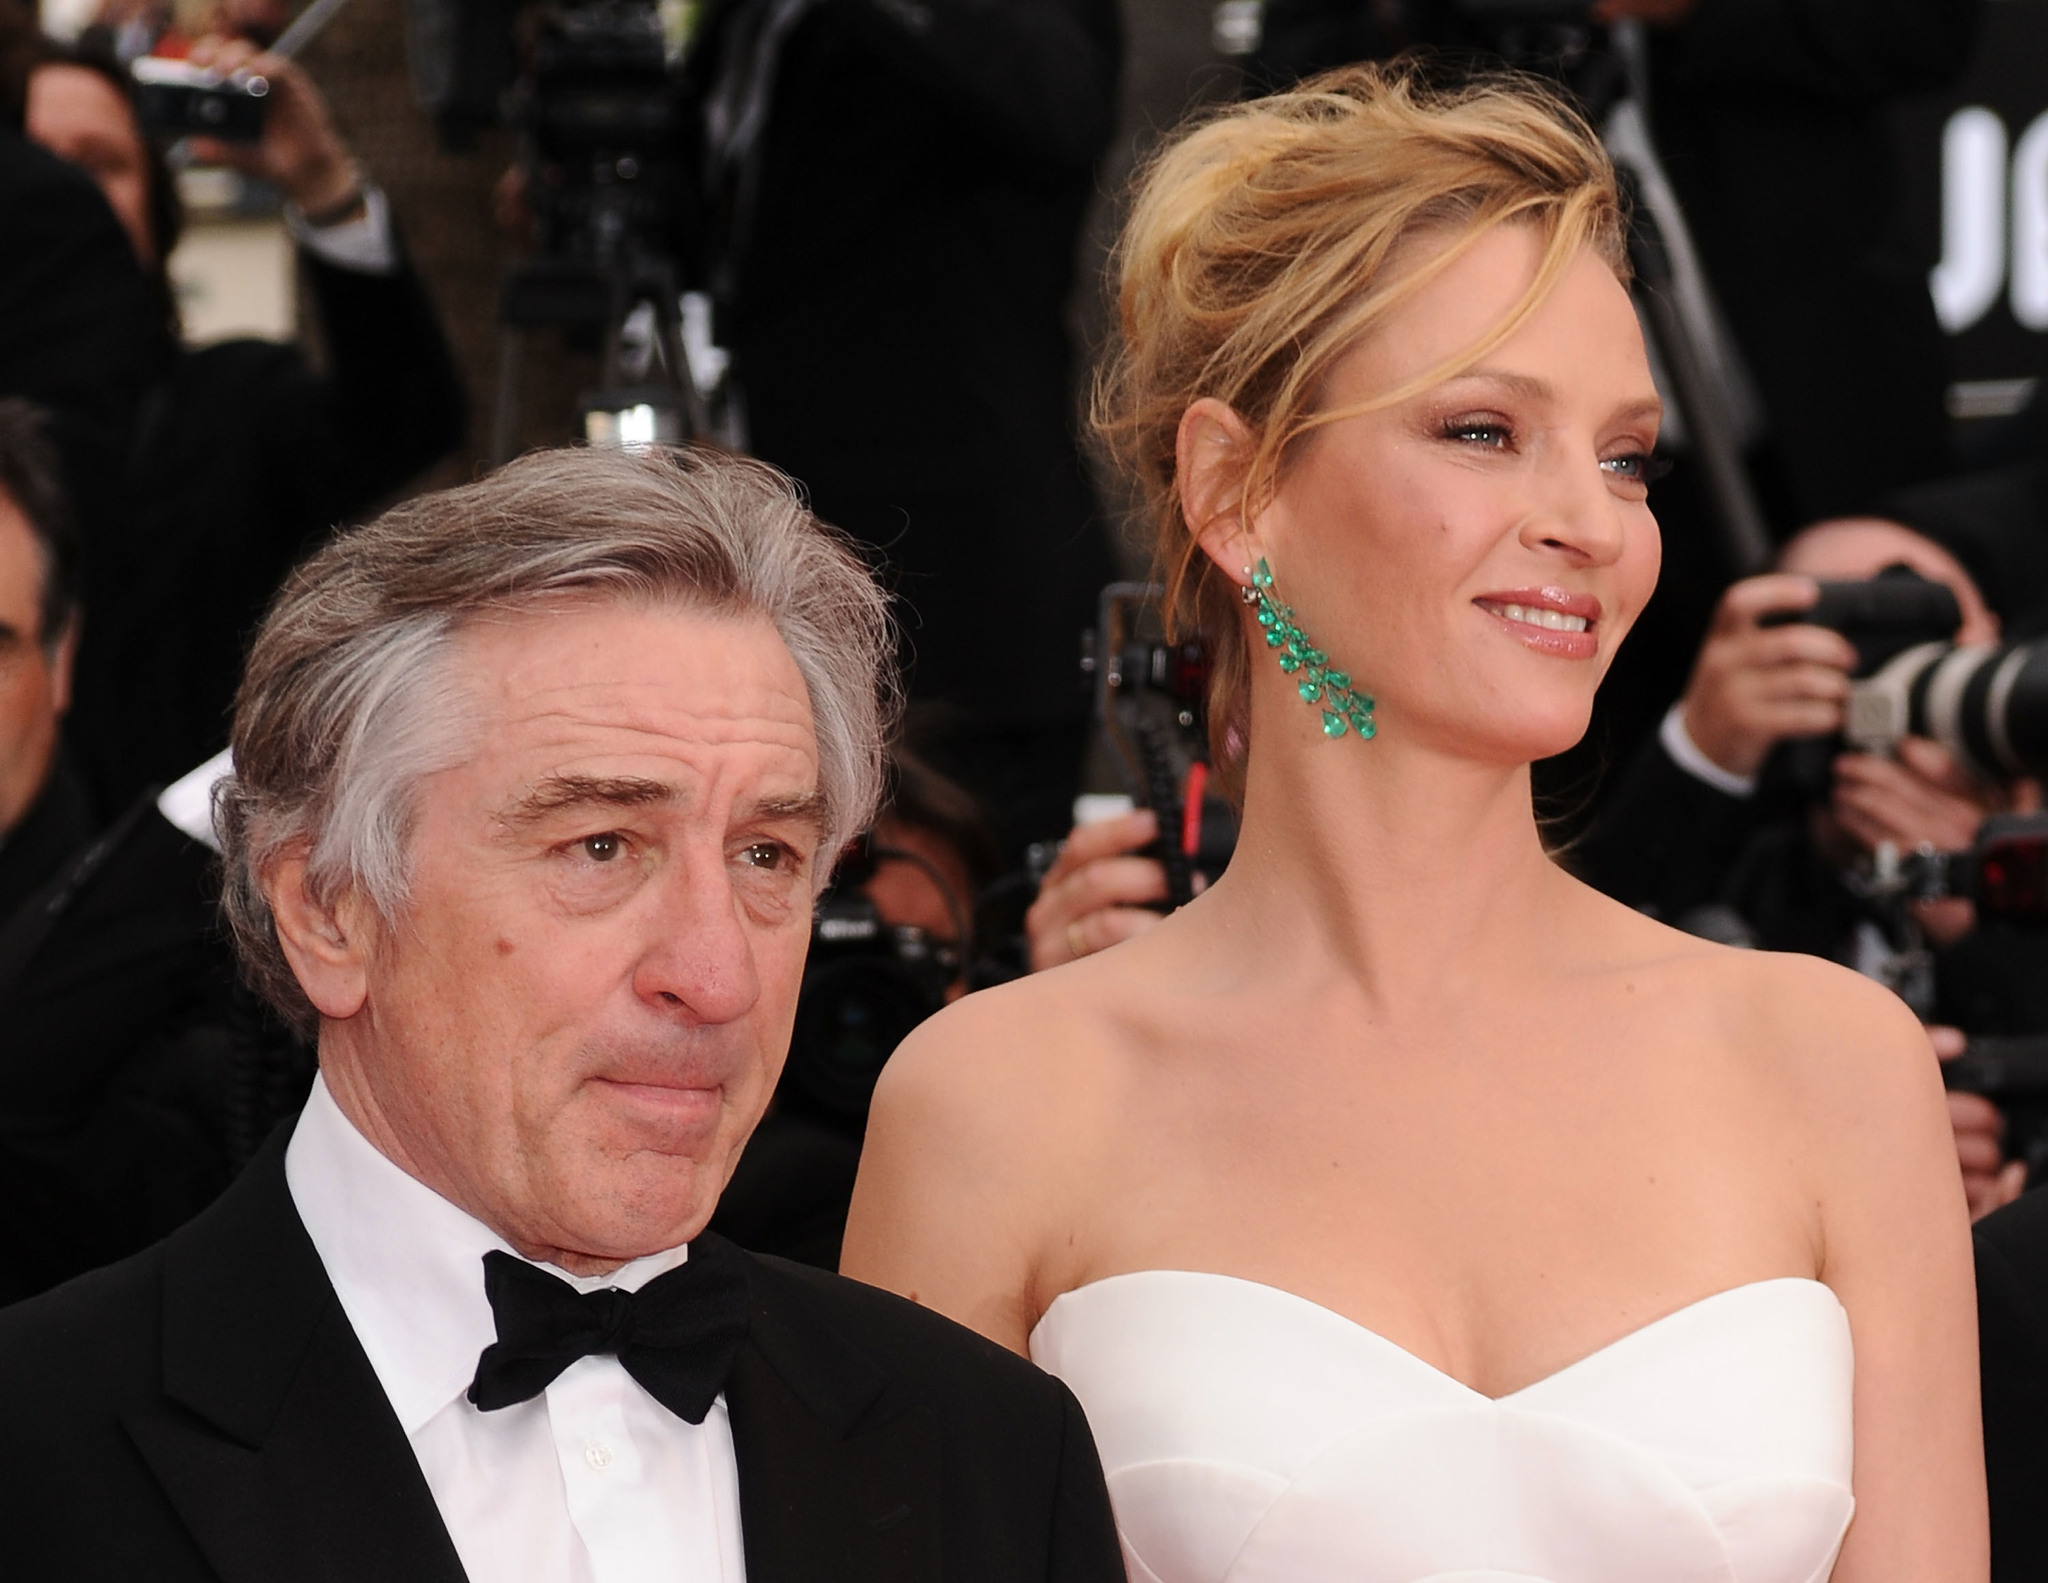 Robert De Niro and Uma Thurman